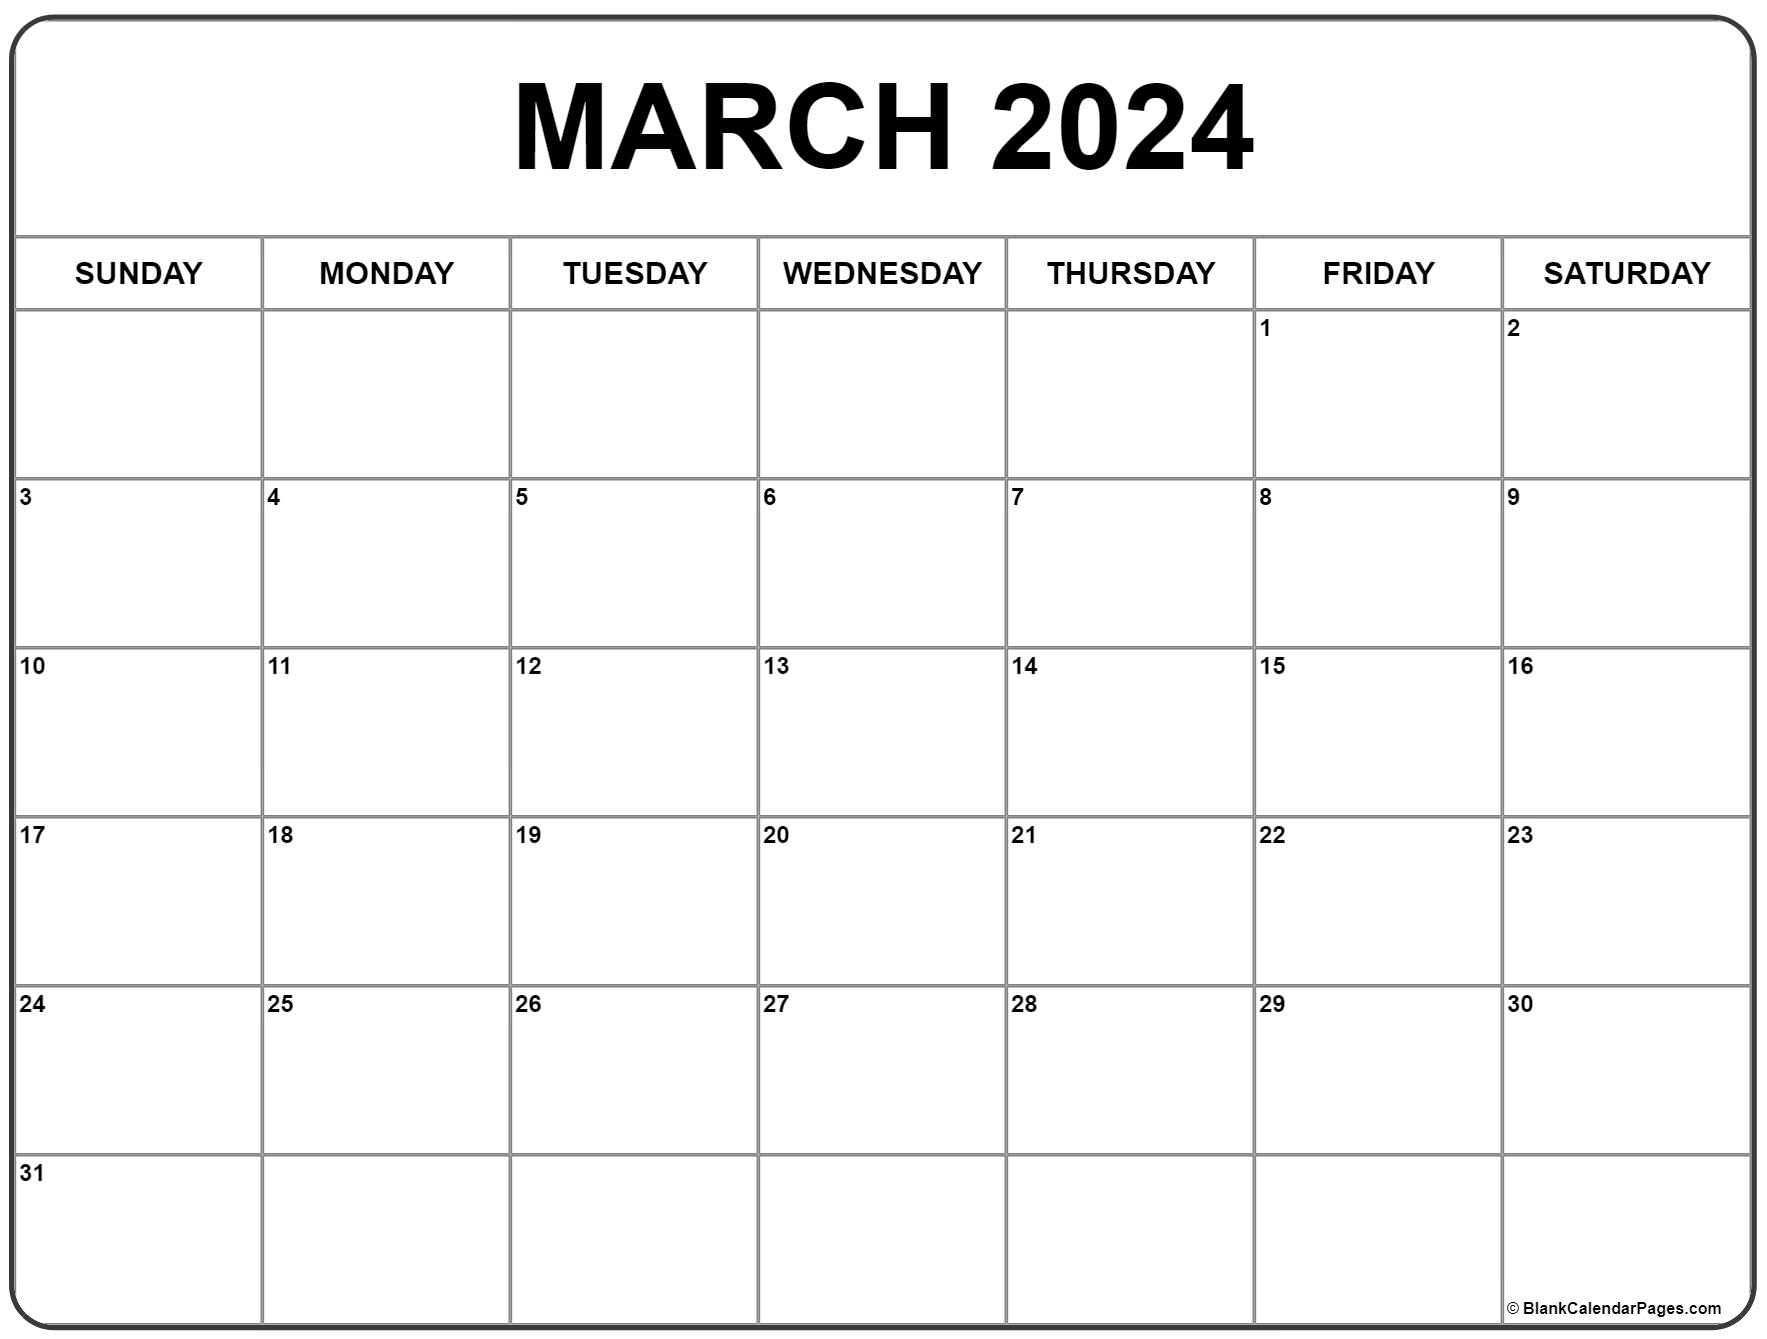 March 2024 Calendar | Free Printable Calendar for Printable Free March 2024 Calendar